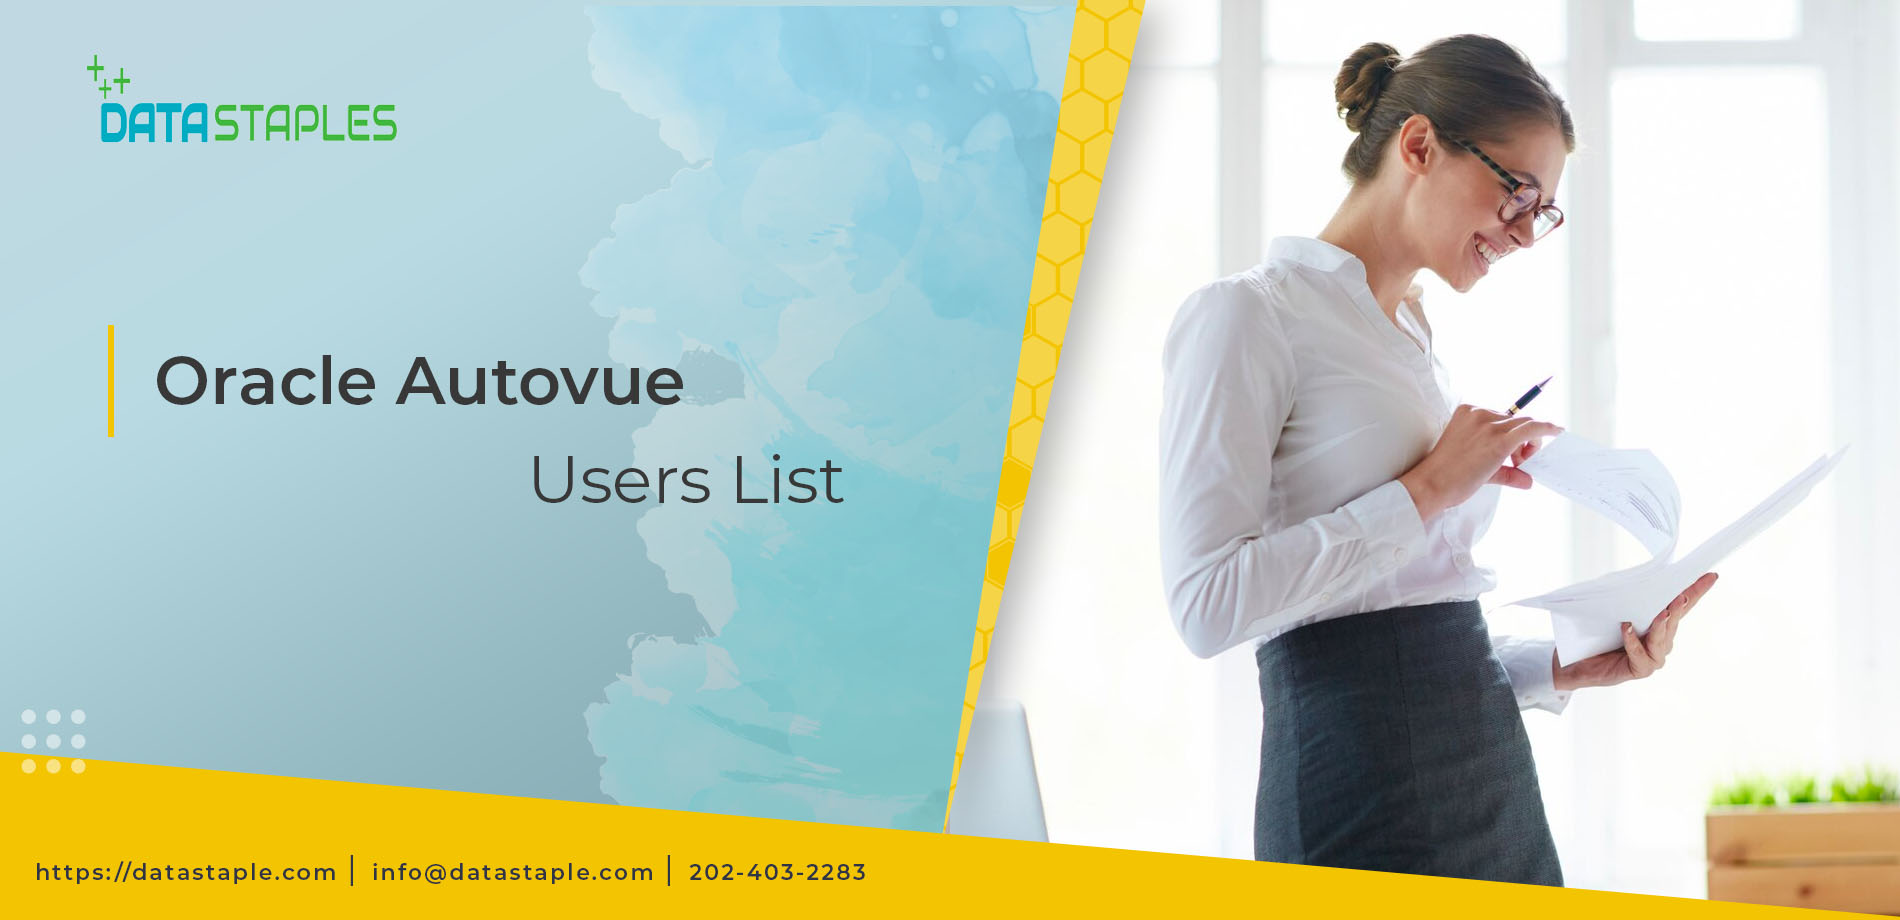 Oracle Autovue Users Mailing List | DataStaples